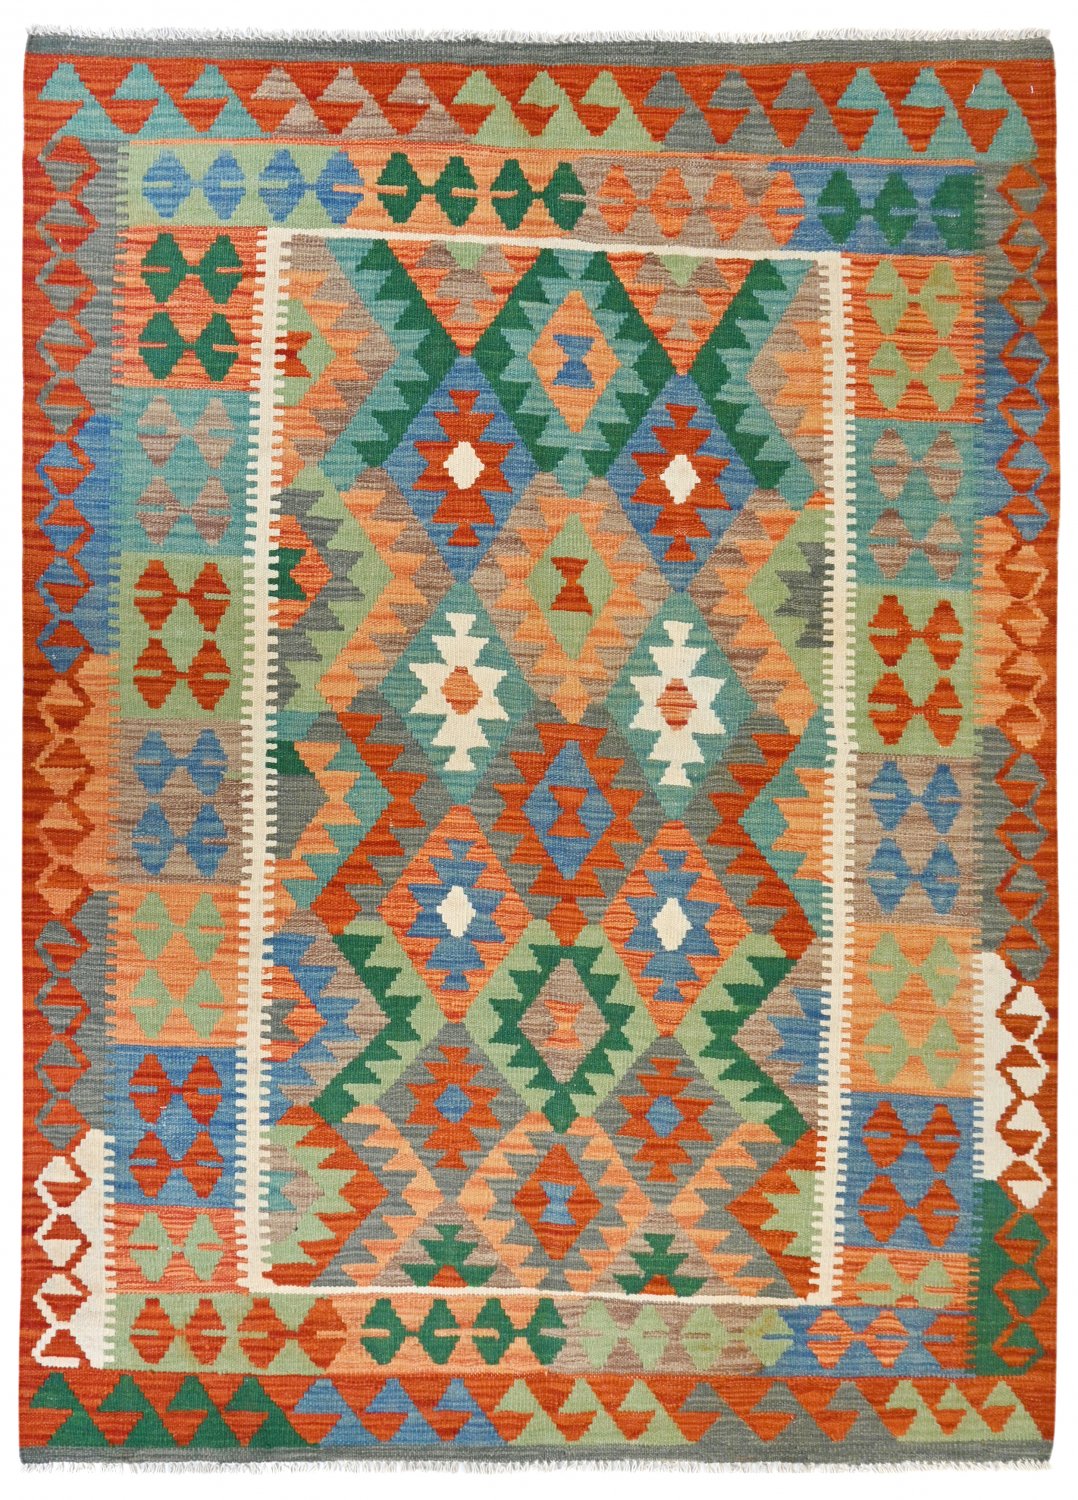 Kilim rug Afghan 197 x 153 cm